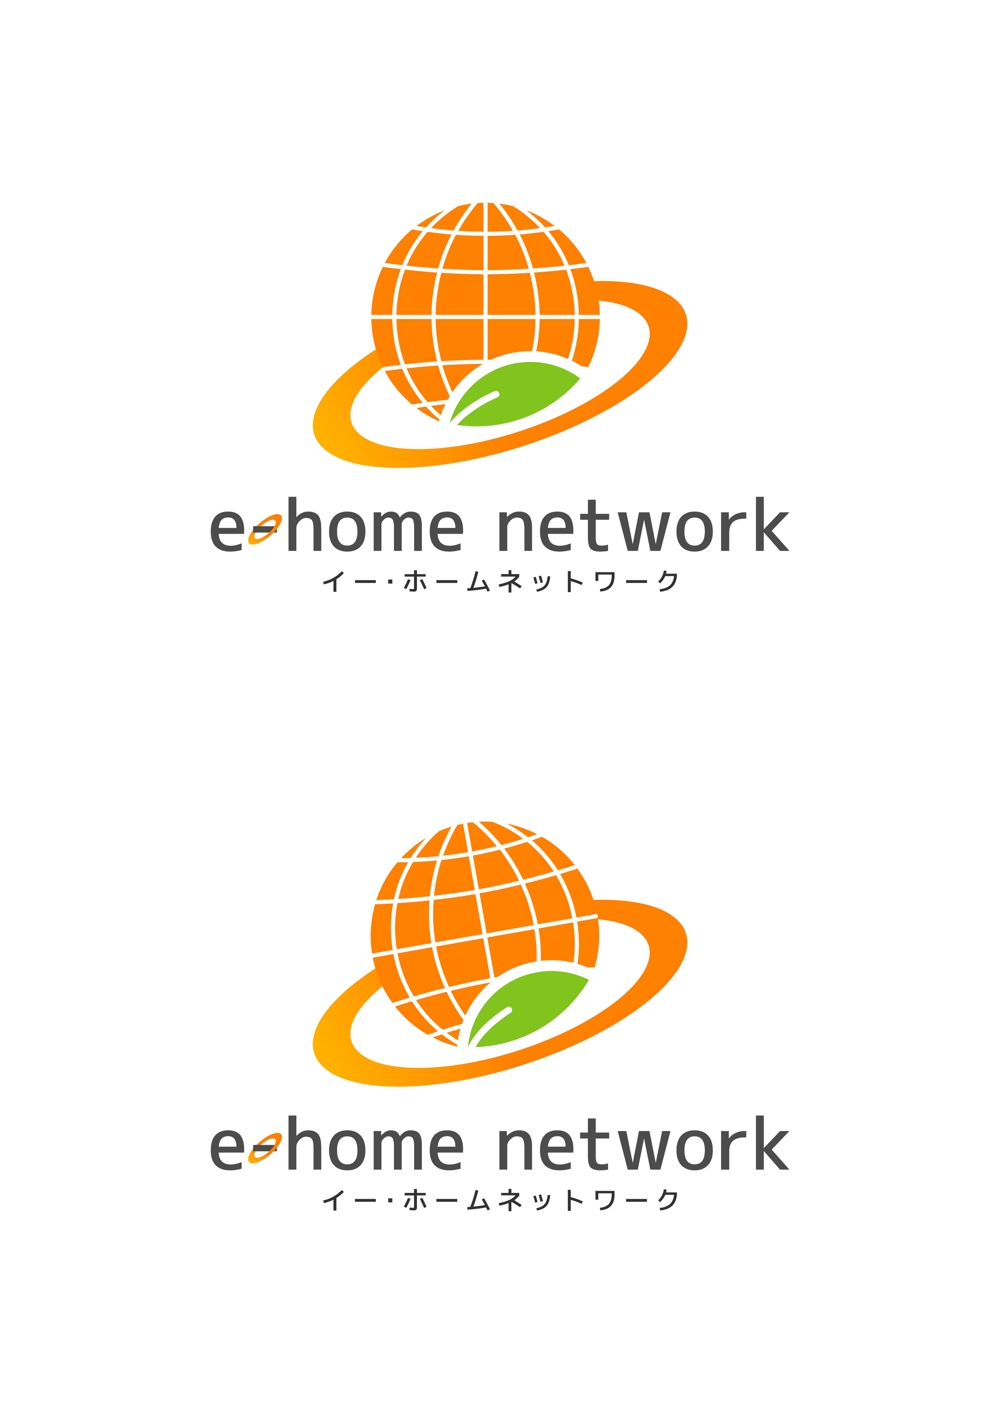 e-homenetwork-1a.jpg